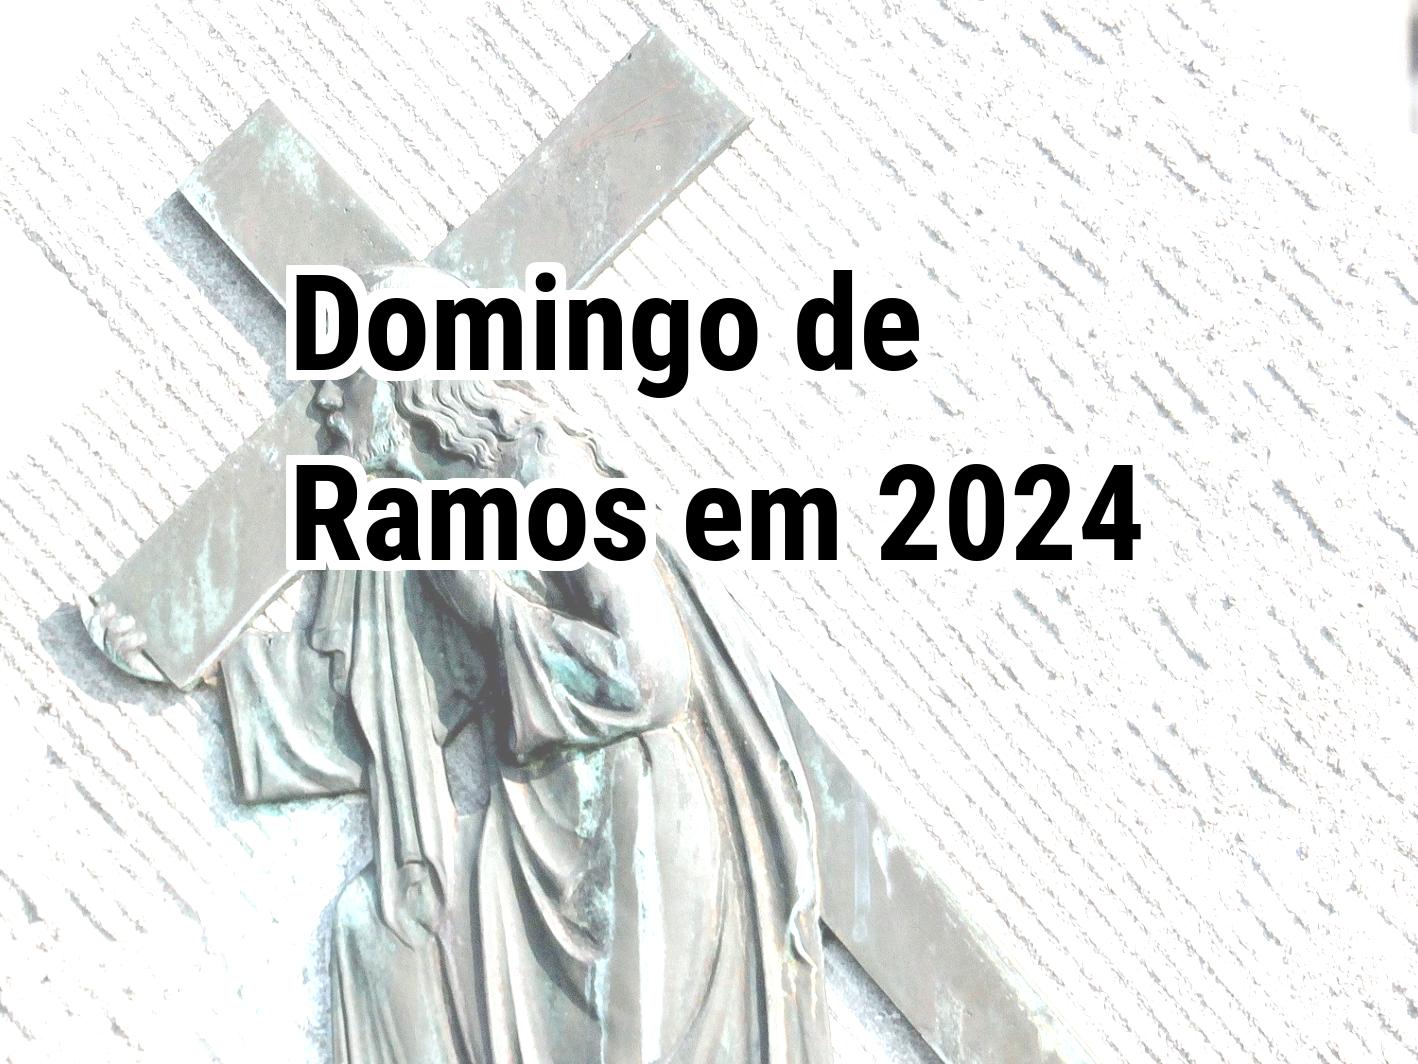 Domingo de Ramos 2024 Calendar Center